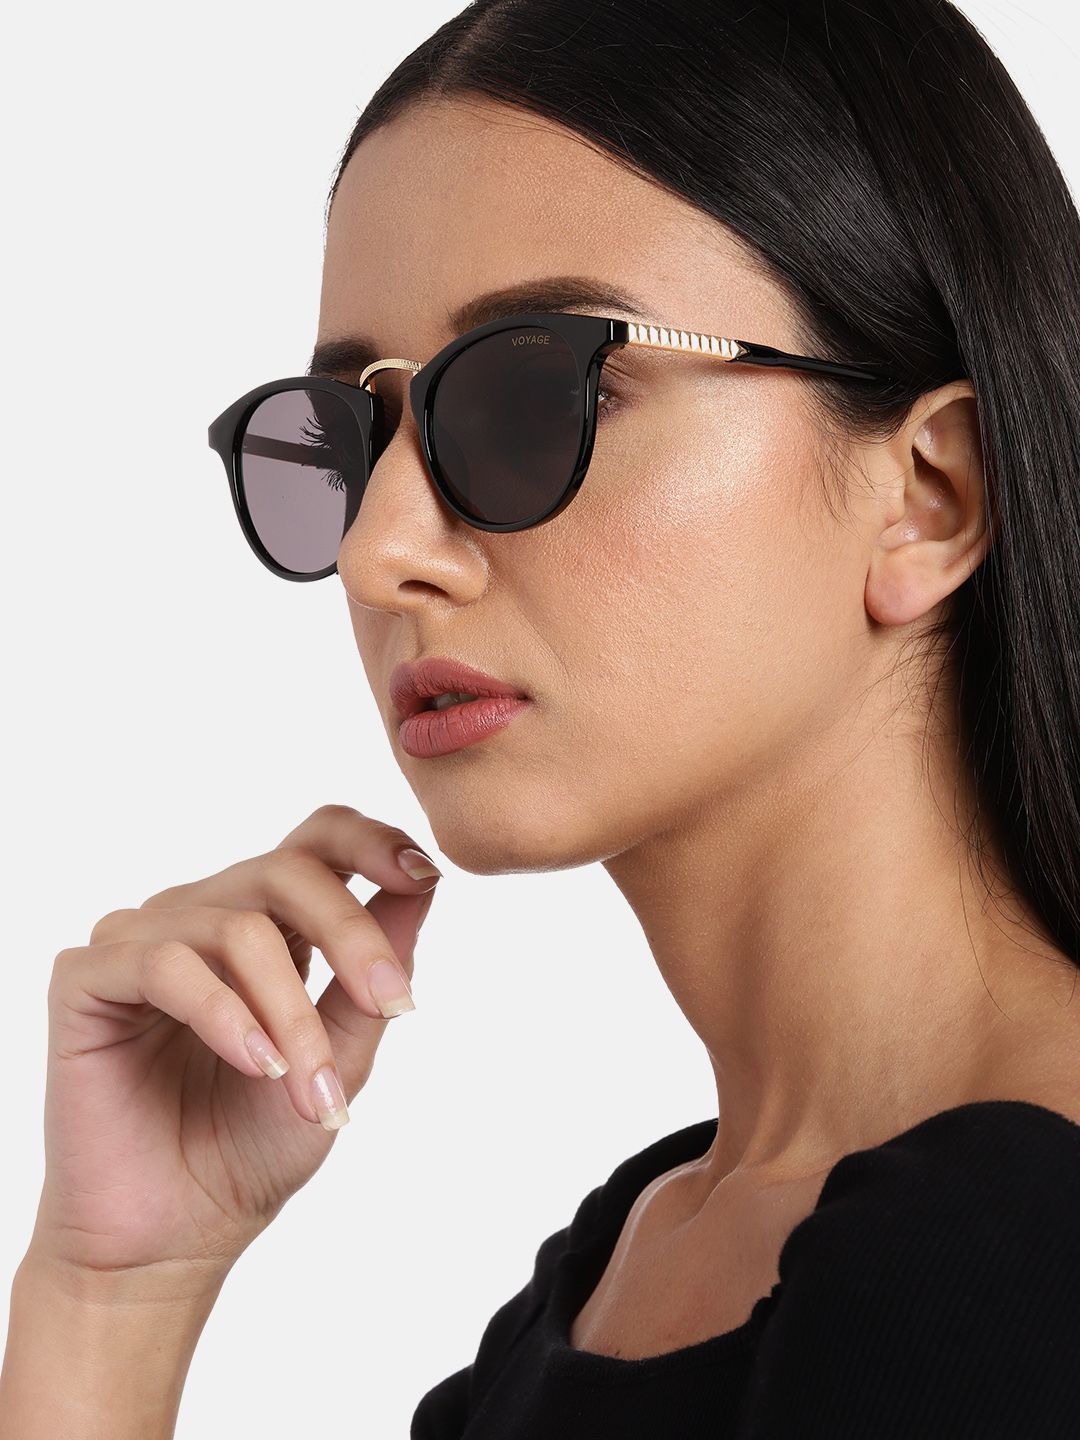 Voyage Women Wayfarer UV Protected Lens Sunglasses 11386746 Price in India